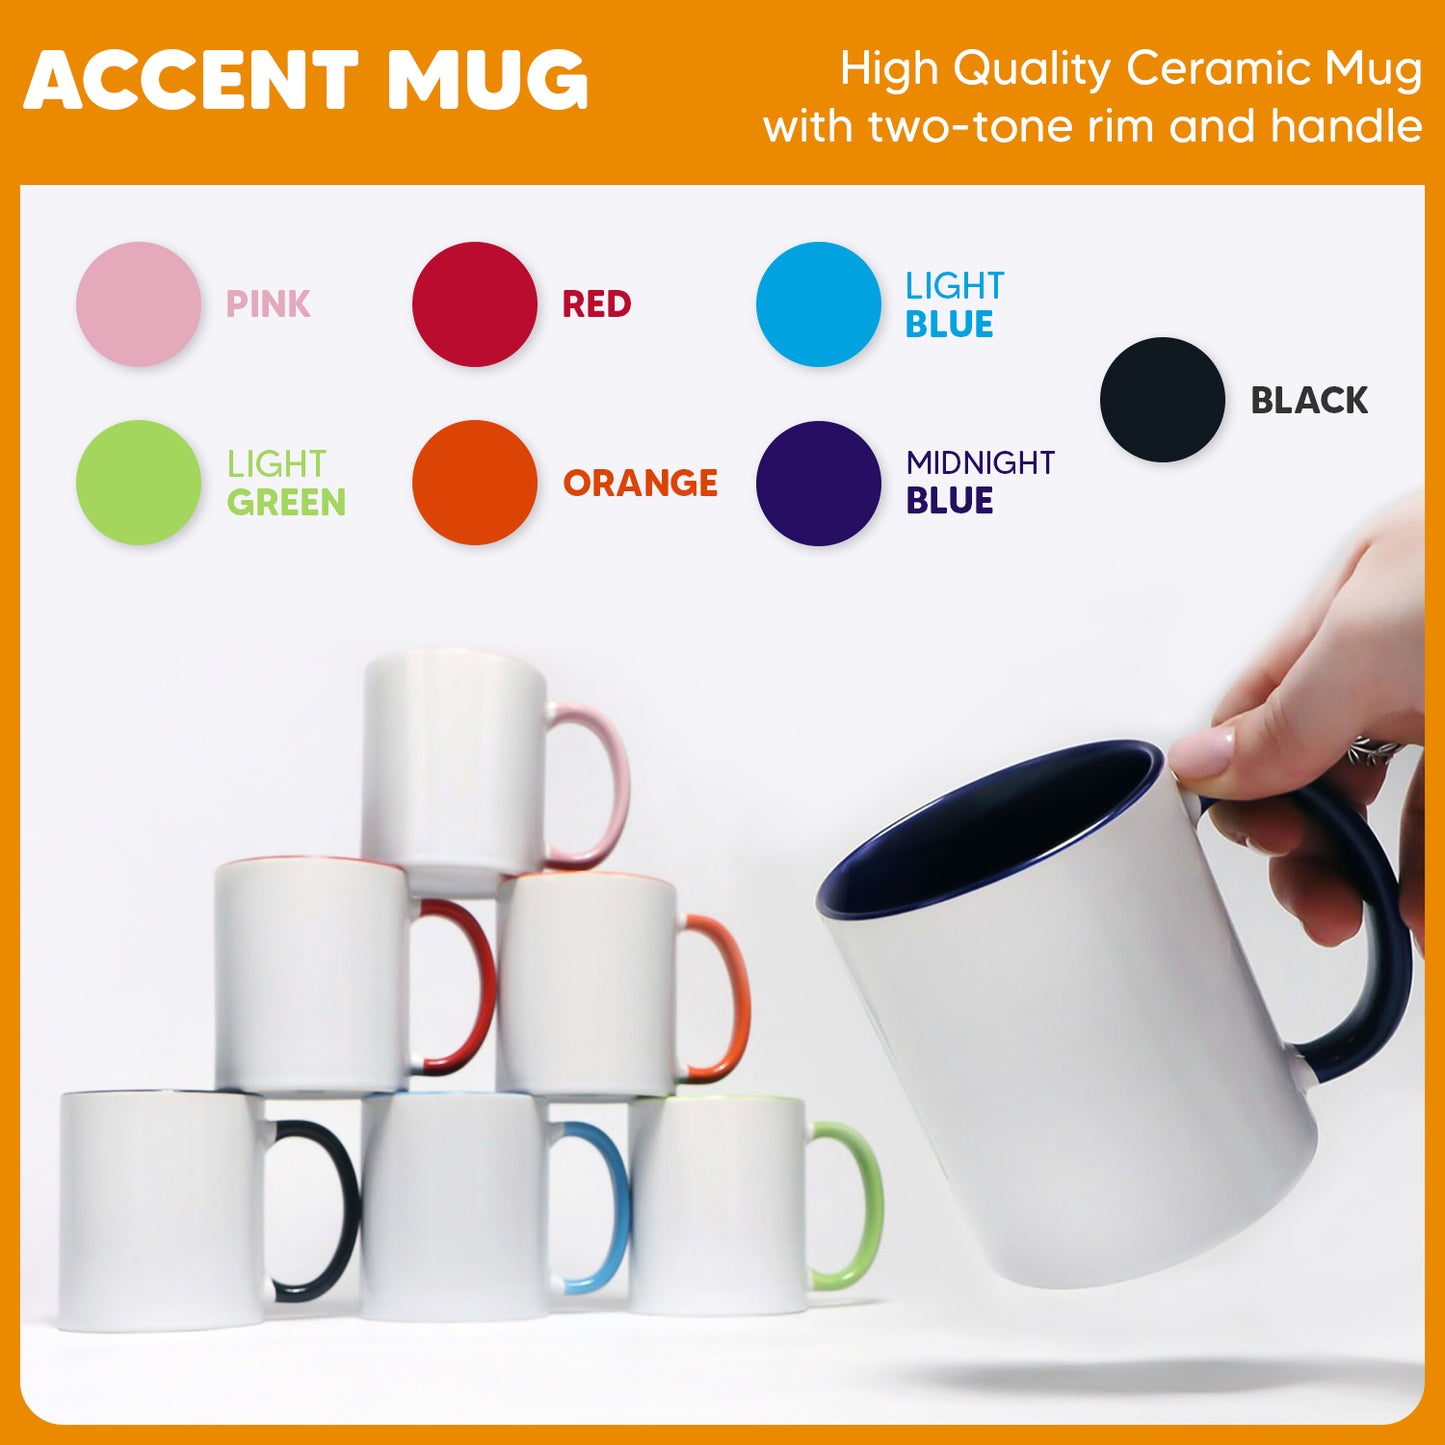 New Parents Custom Text Image Coffee Mug Set